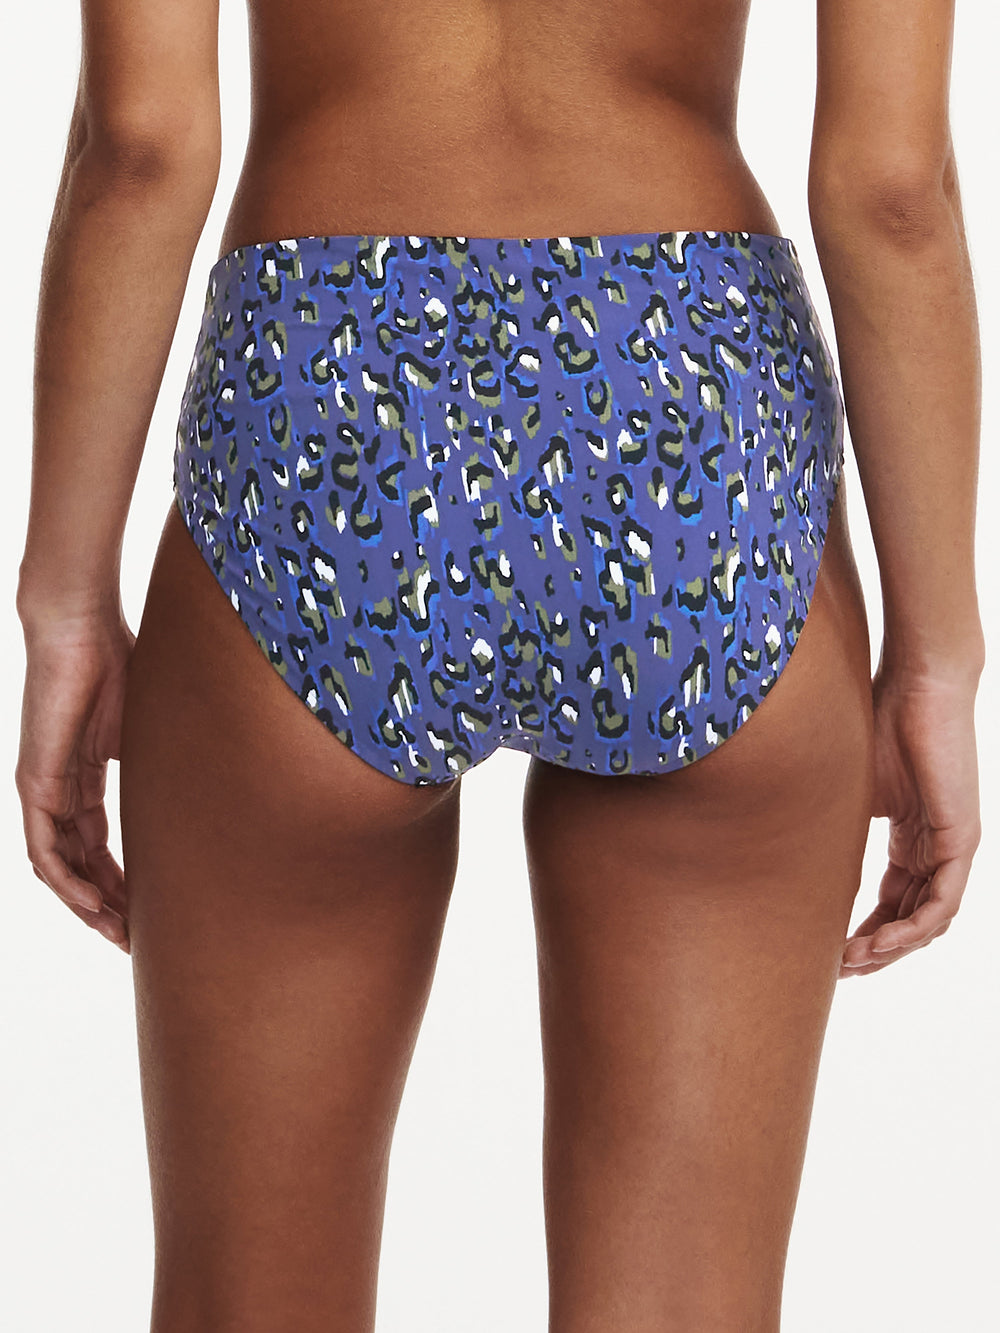 Chantelle Swimwear Eos Full Brief - Blue Leopard Full Bikini Brief Chantelle 